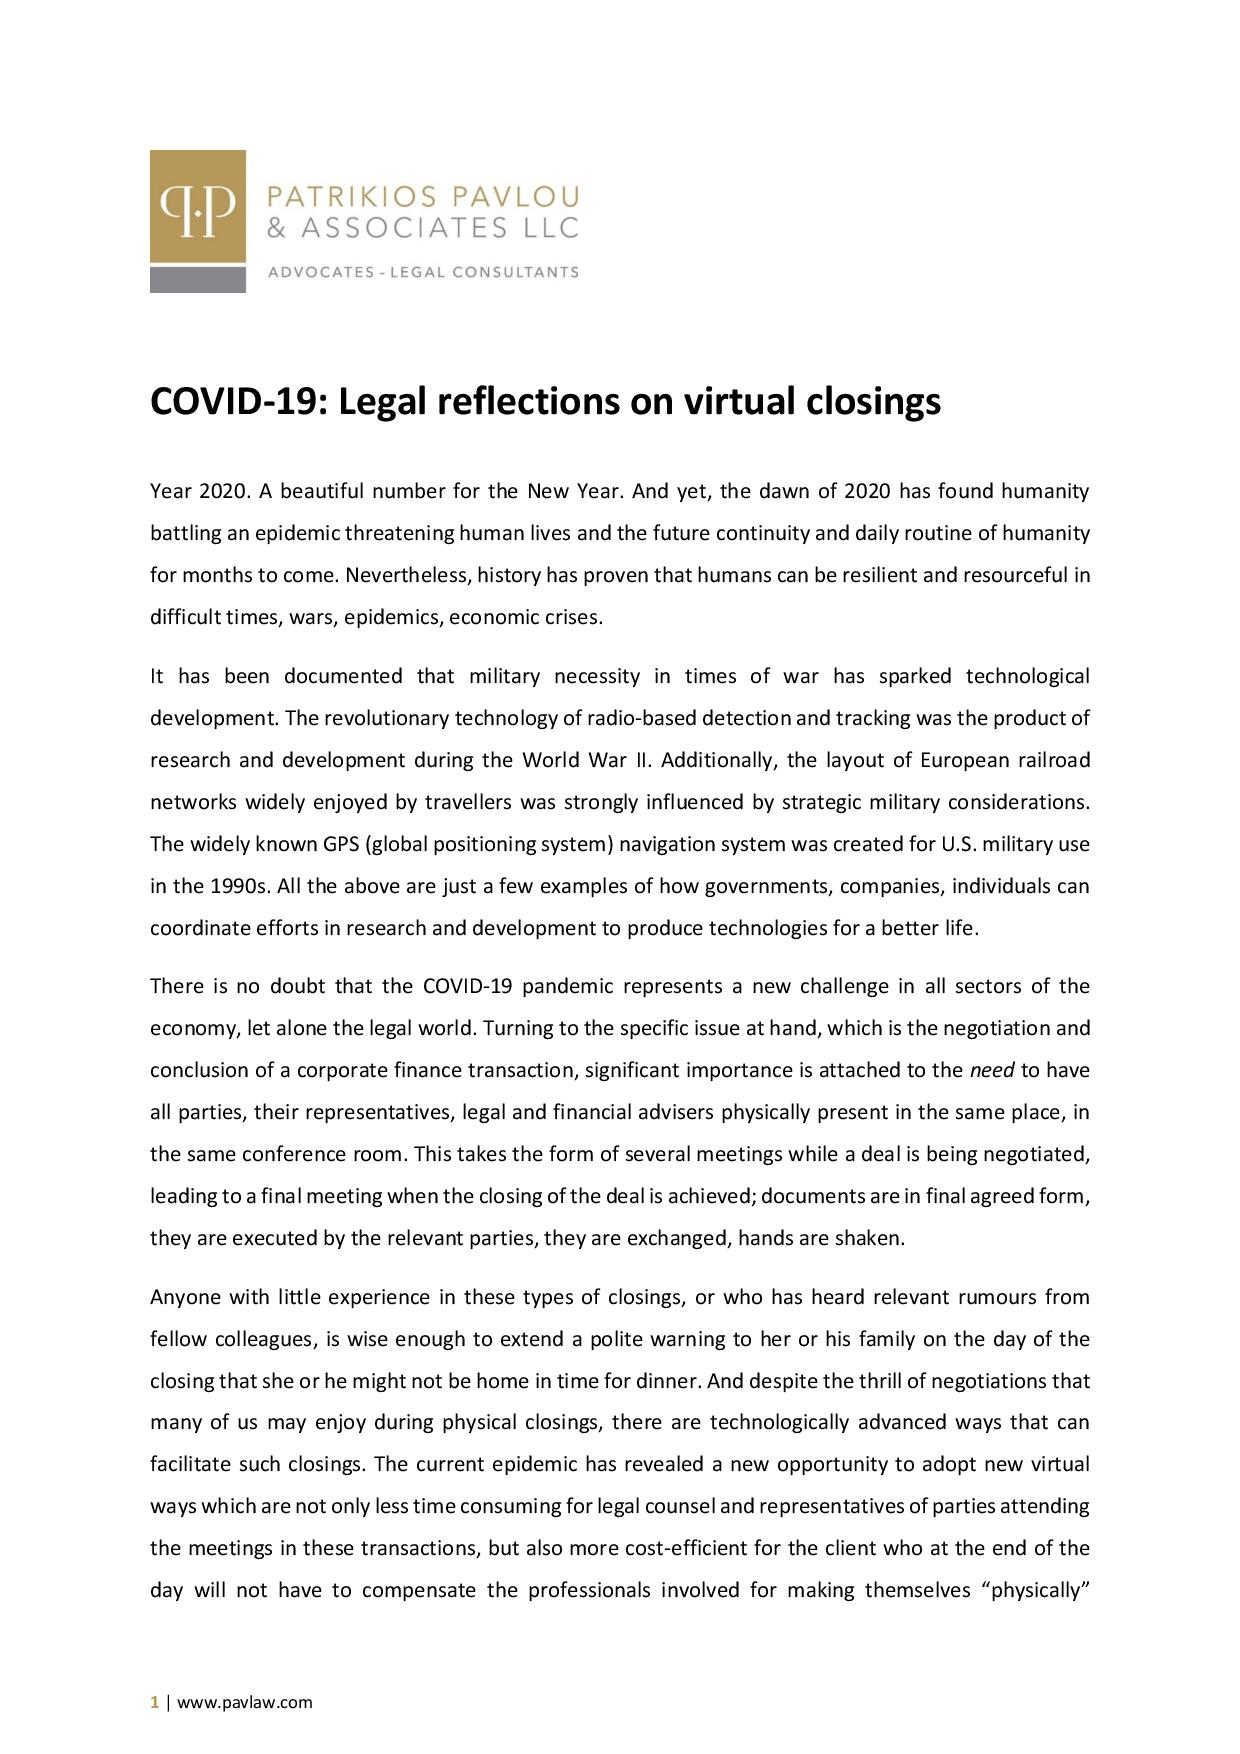 Patrikios Pavlou & Associates LLC: COVID-19: Legal reflections on virtual closings